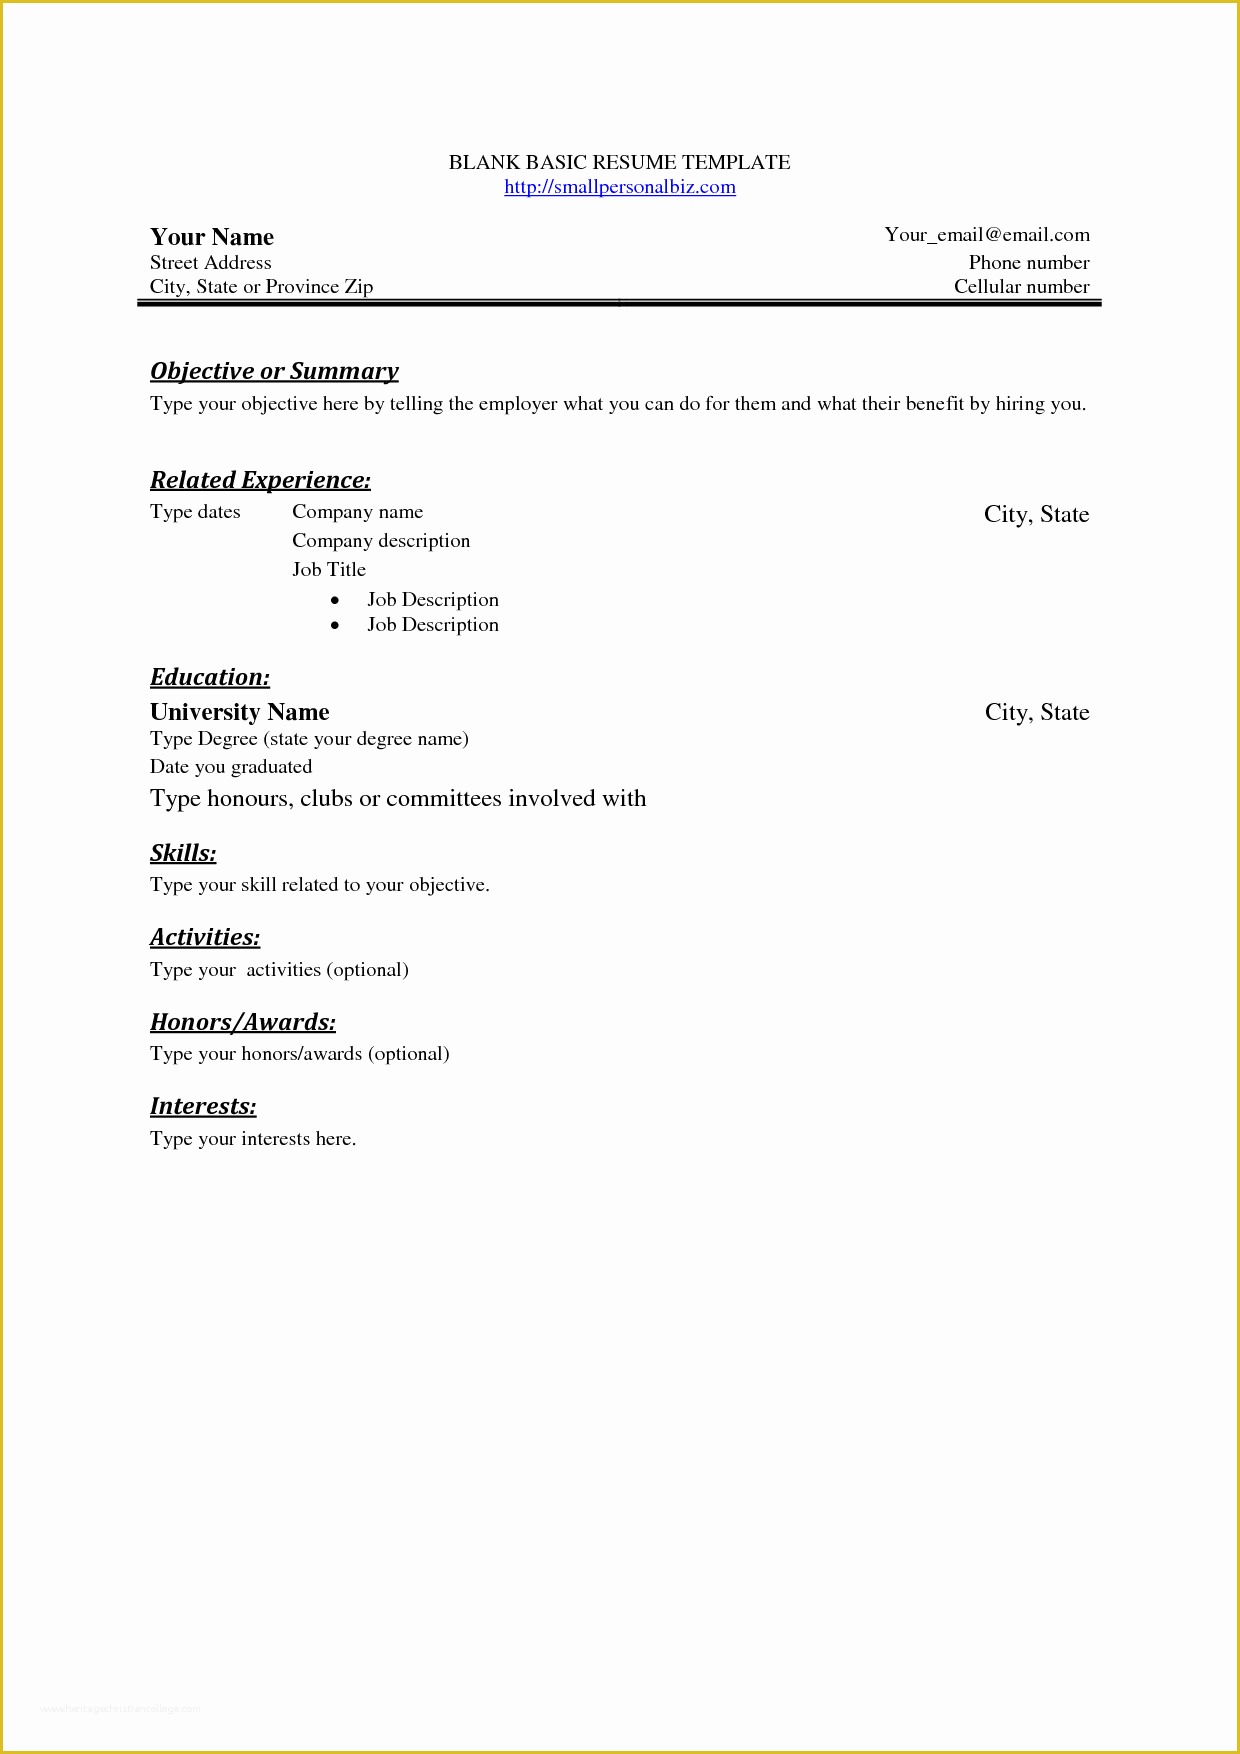 Free Job Resume Template Of Free Basic Blank Resume Template